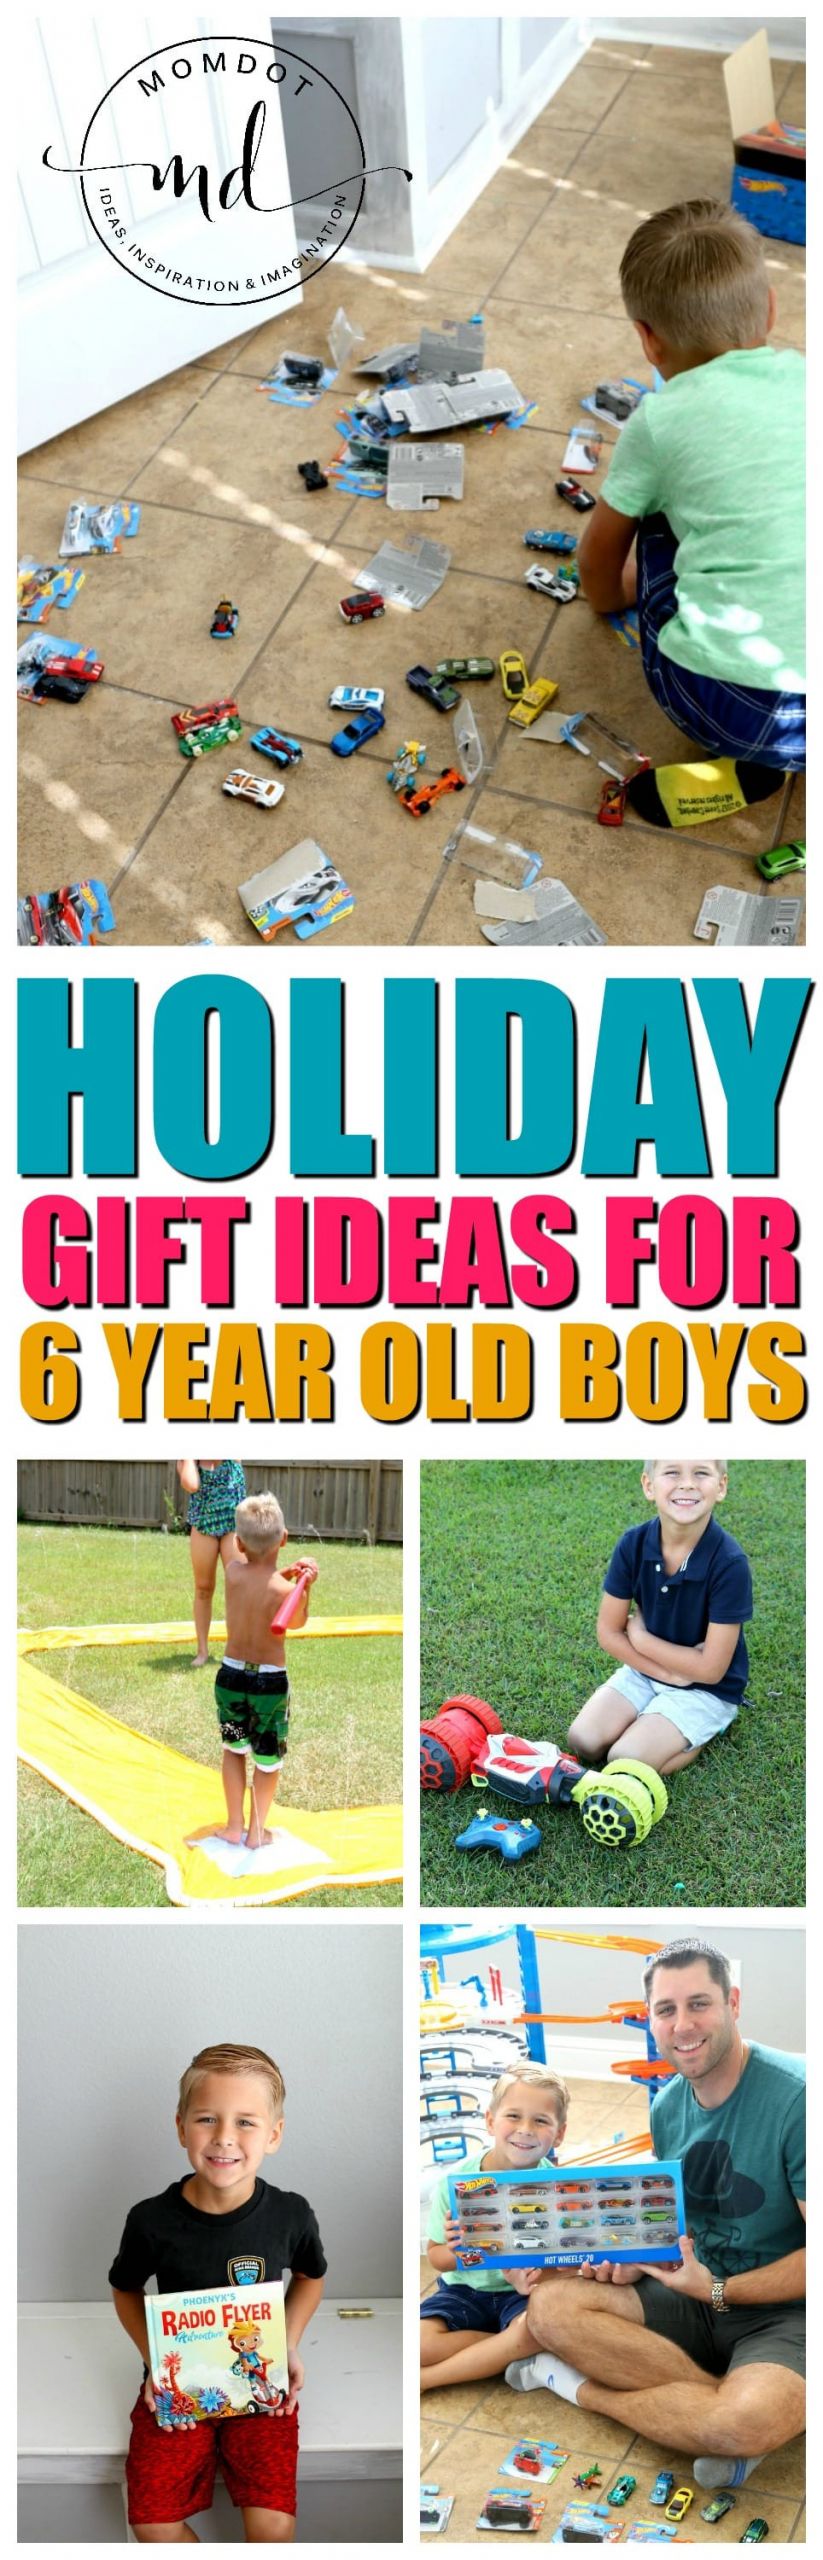 Boys Gift Ideas Age 6
 Gift Ideas for 6 Year Old Boys